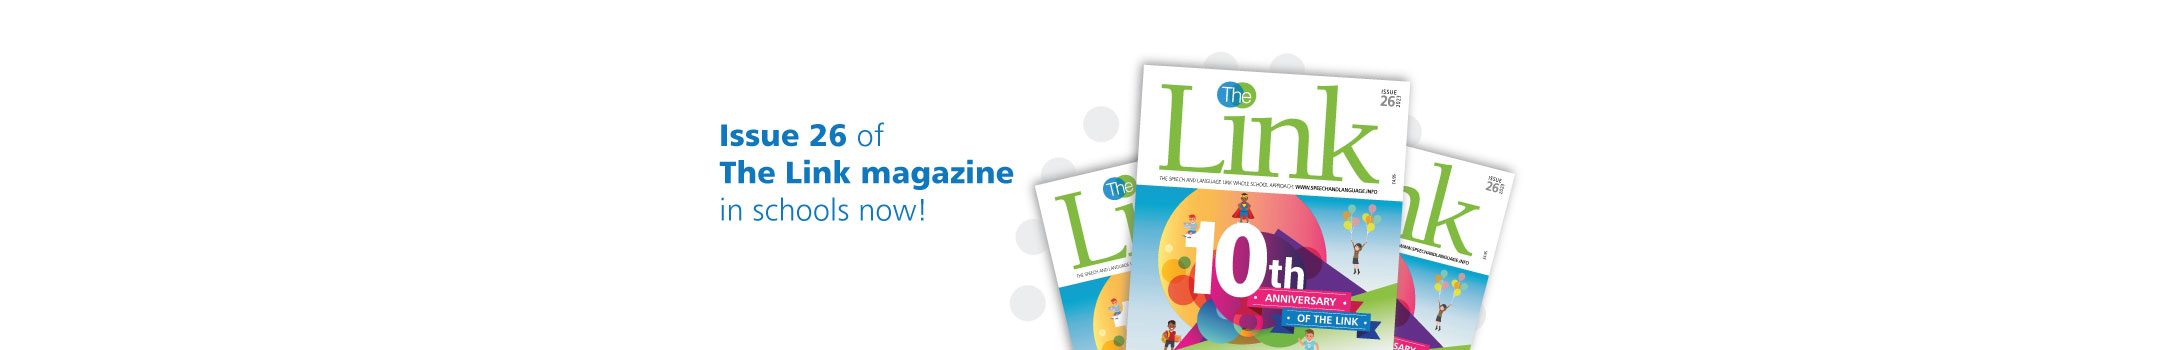 The Link magazine